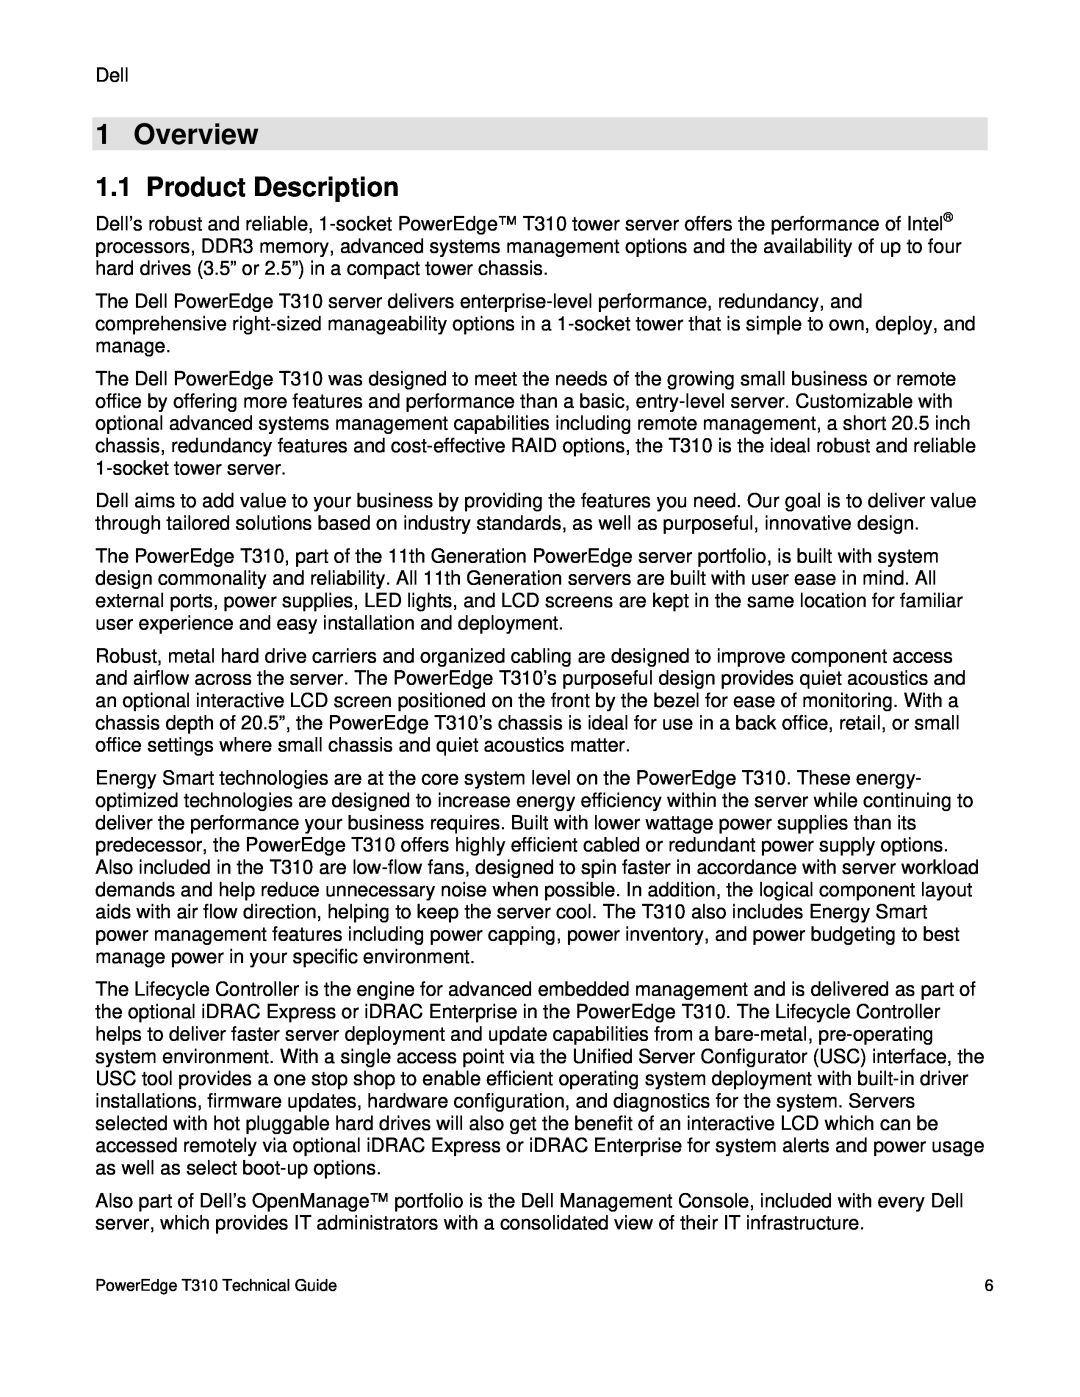 Dell T310 manual Overview, Product Description 